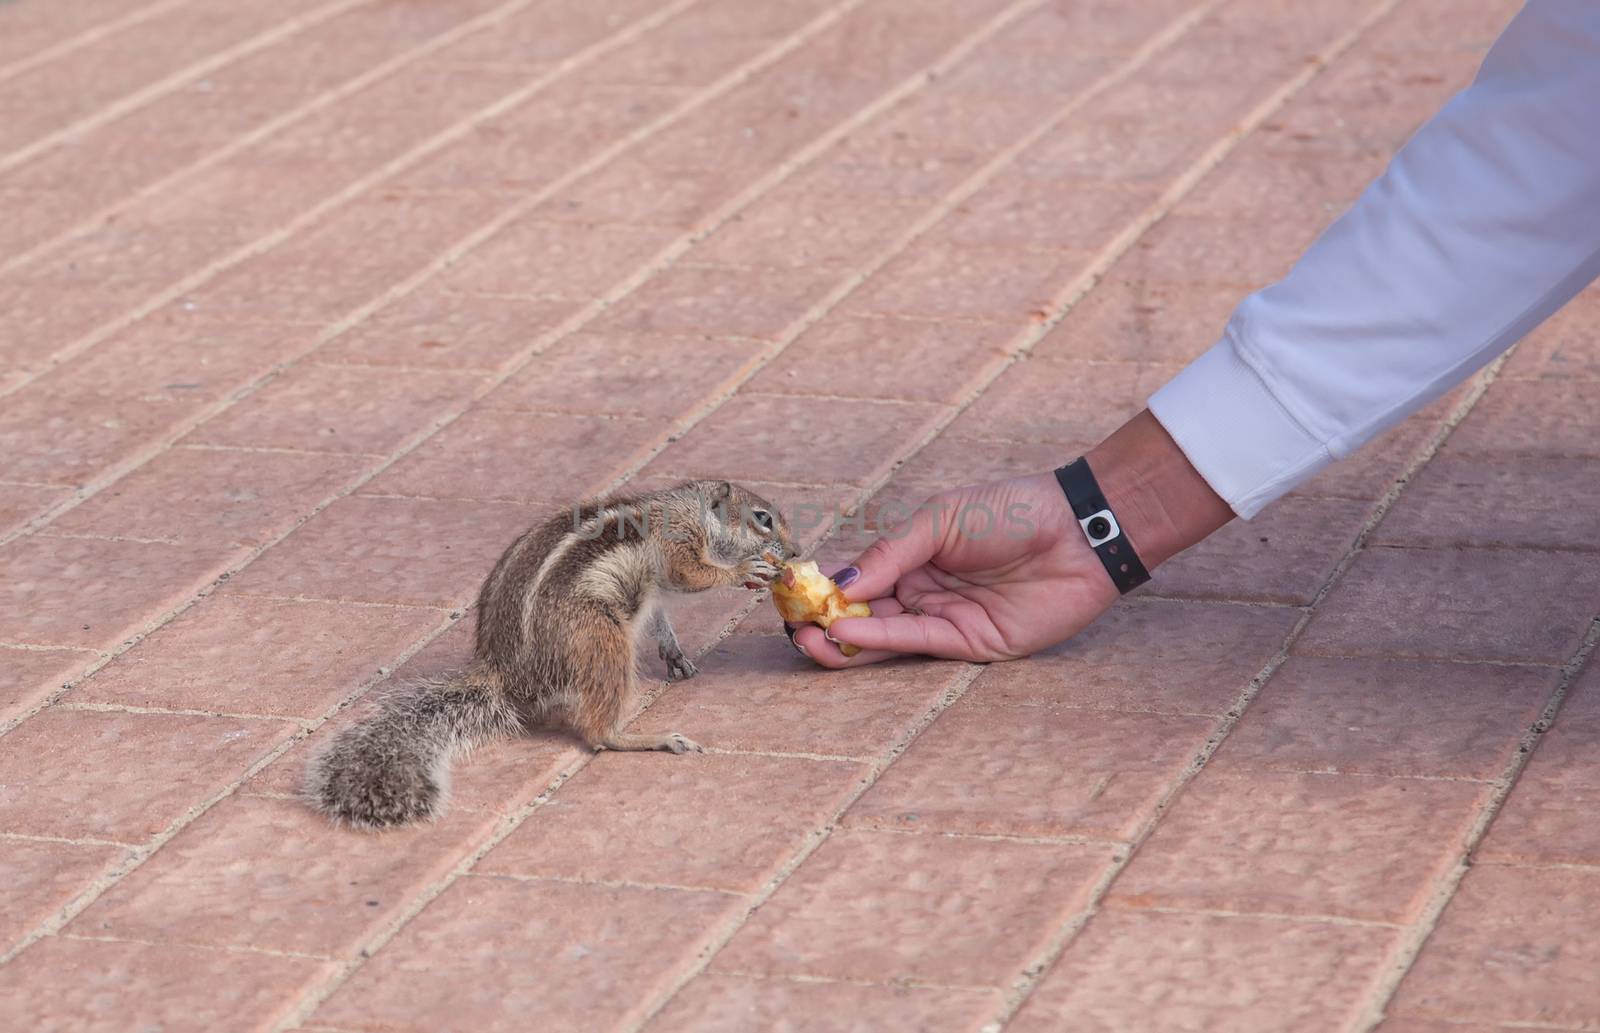 chipmunk funny animal with Woman Fuerteventura island Canarian Islands